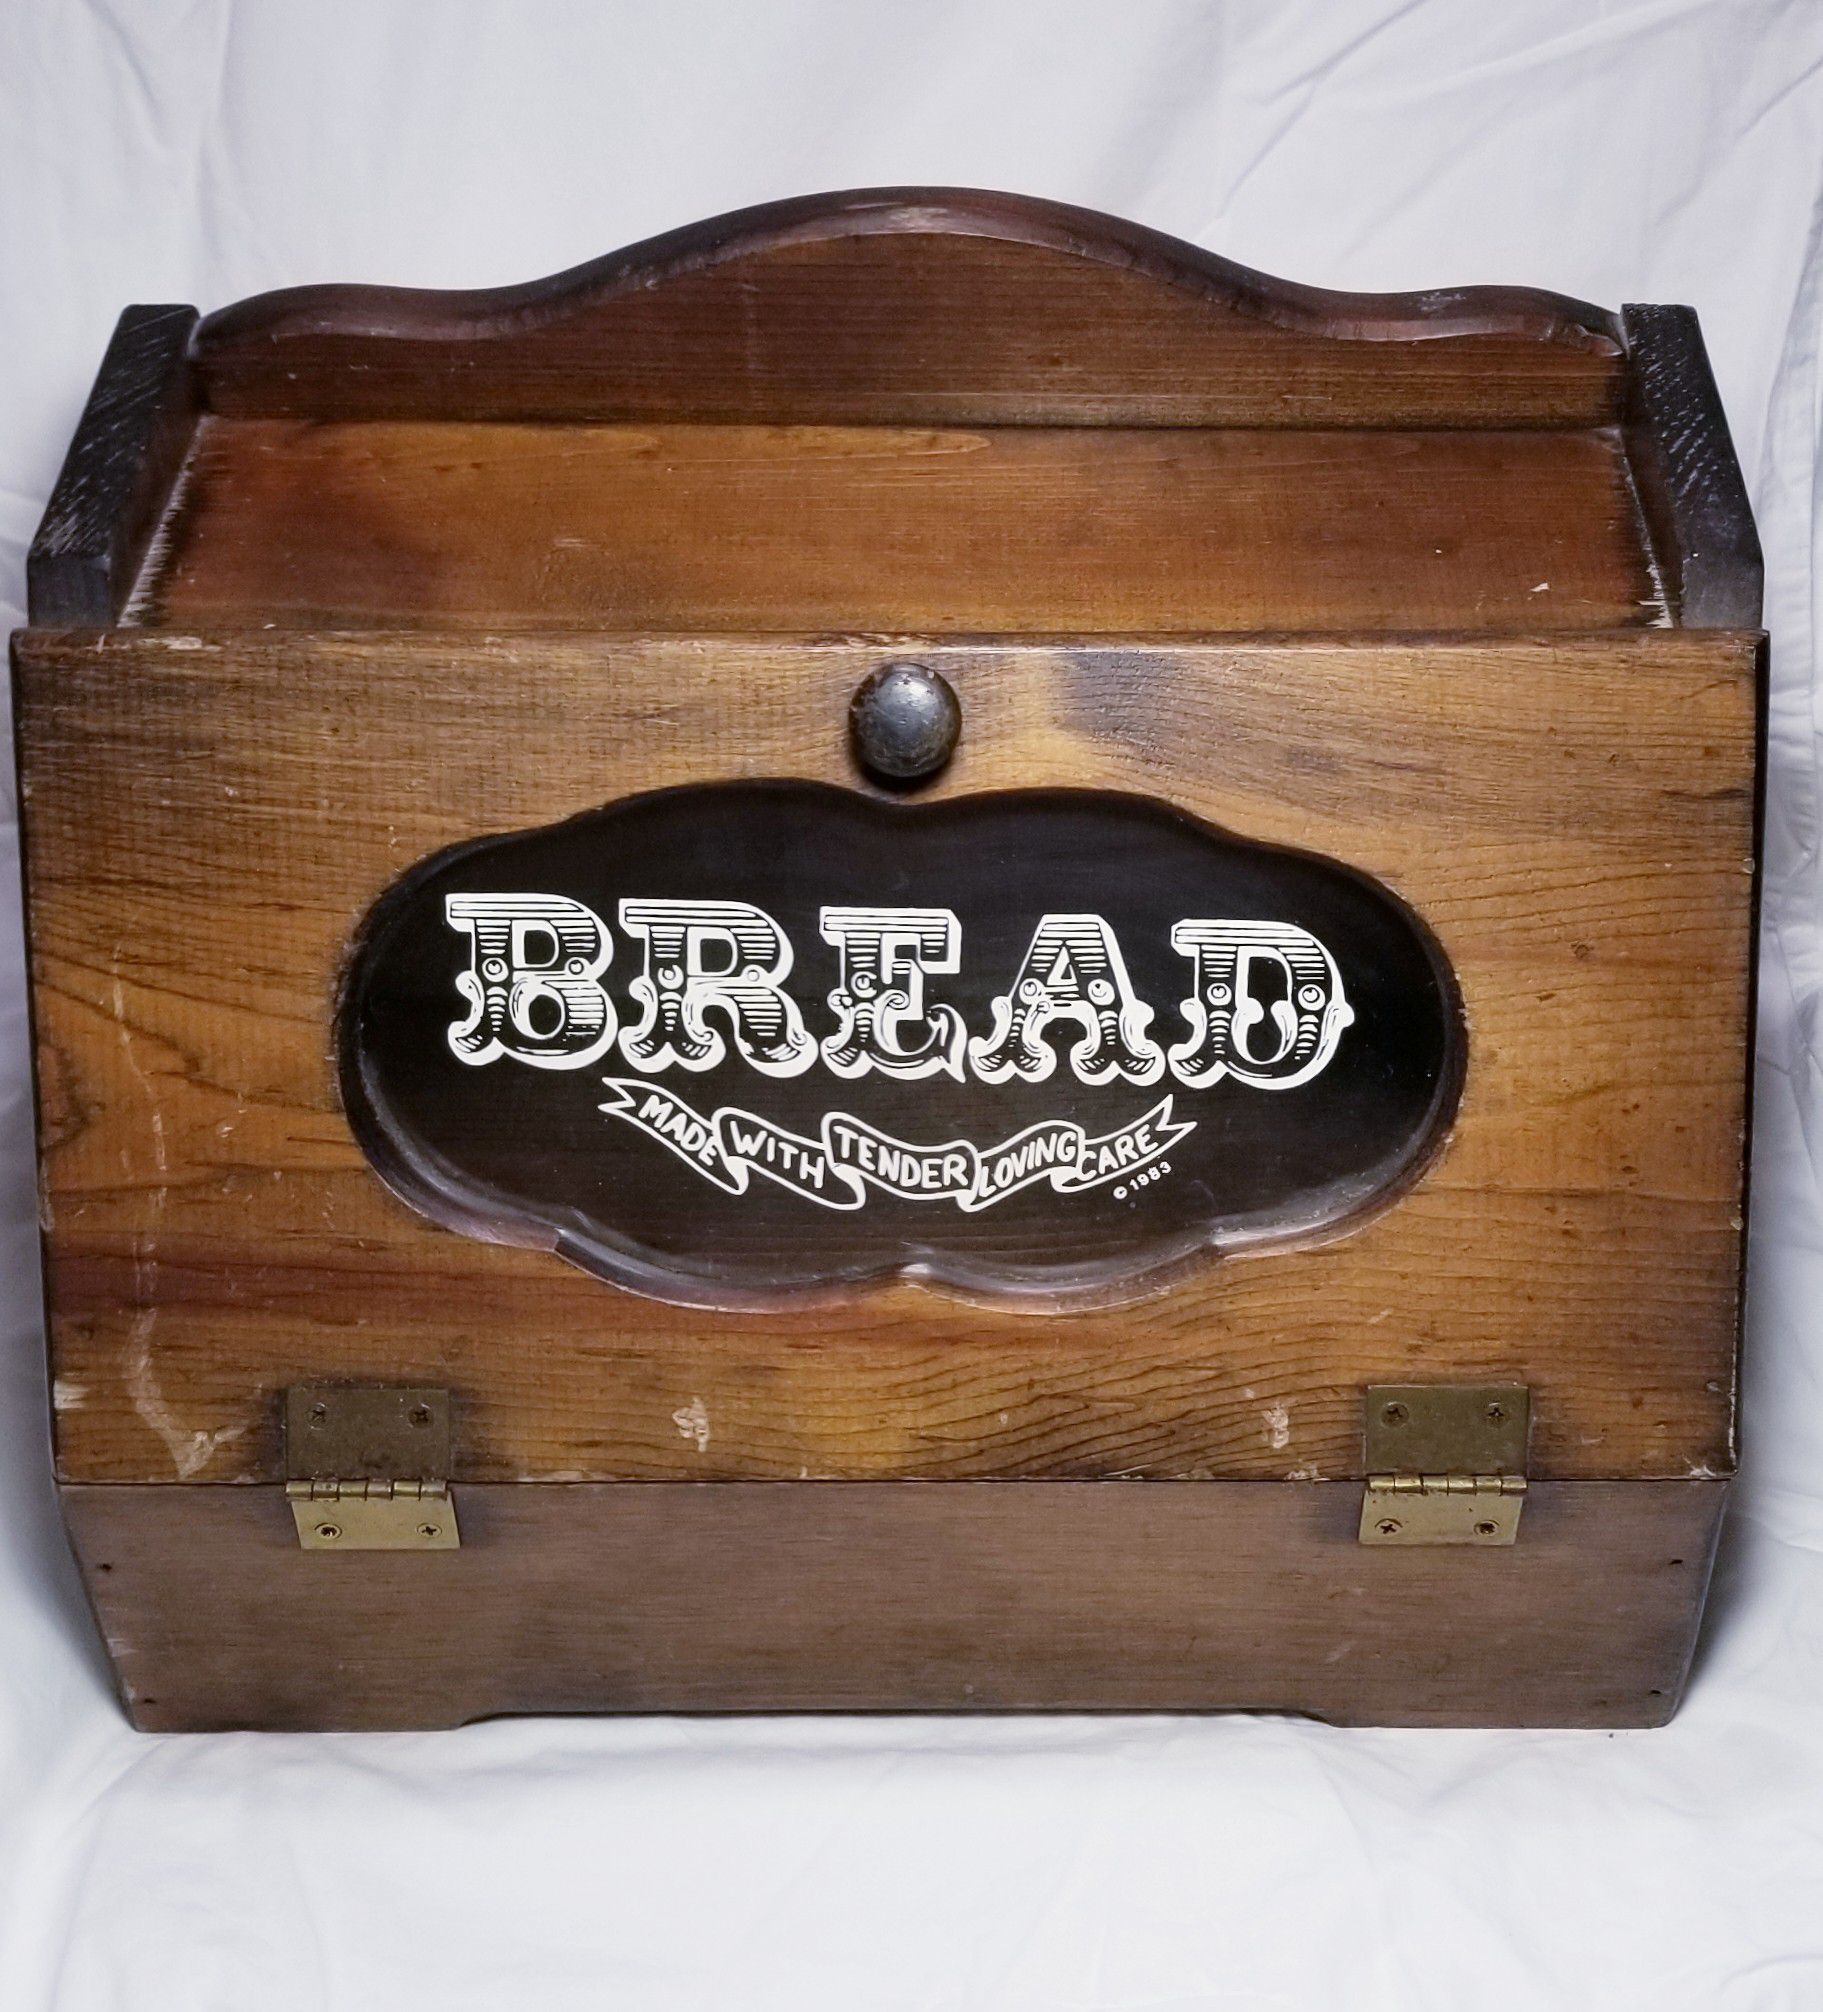 🌟 Vintage Tupperware 'Bread Stor N Serve' Bread Box - 1980, Sold!